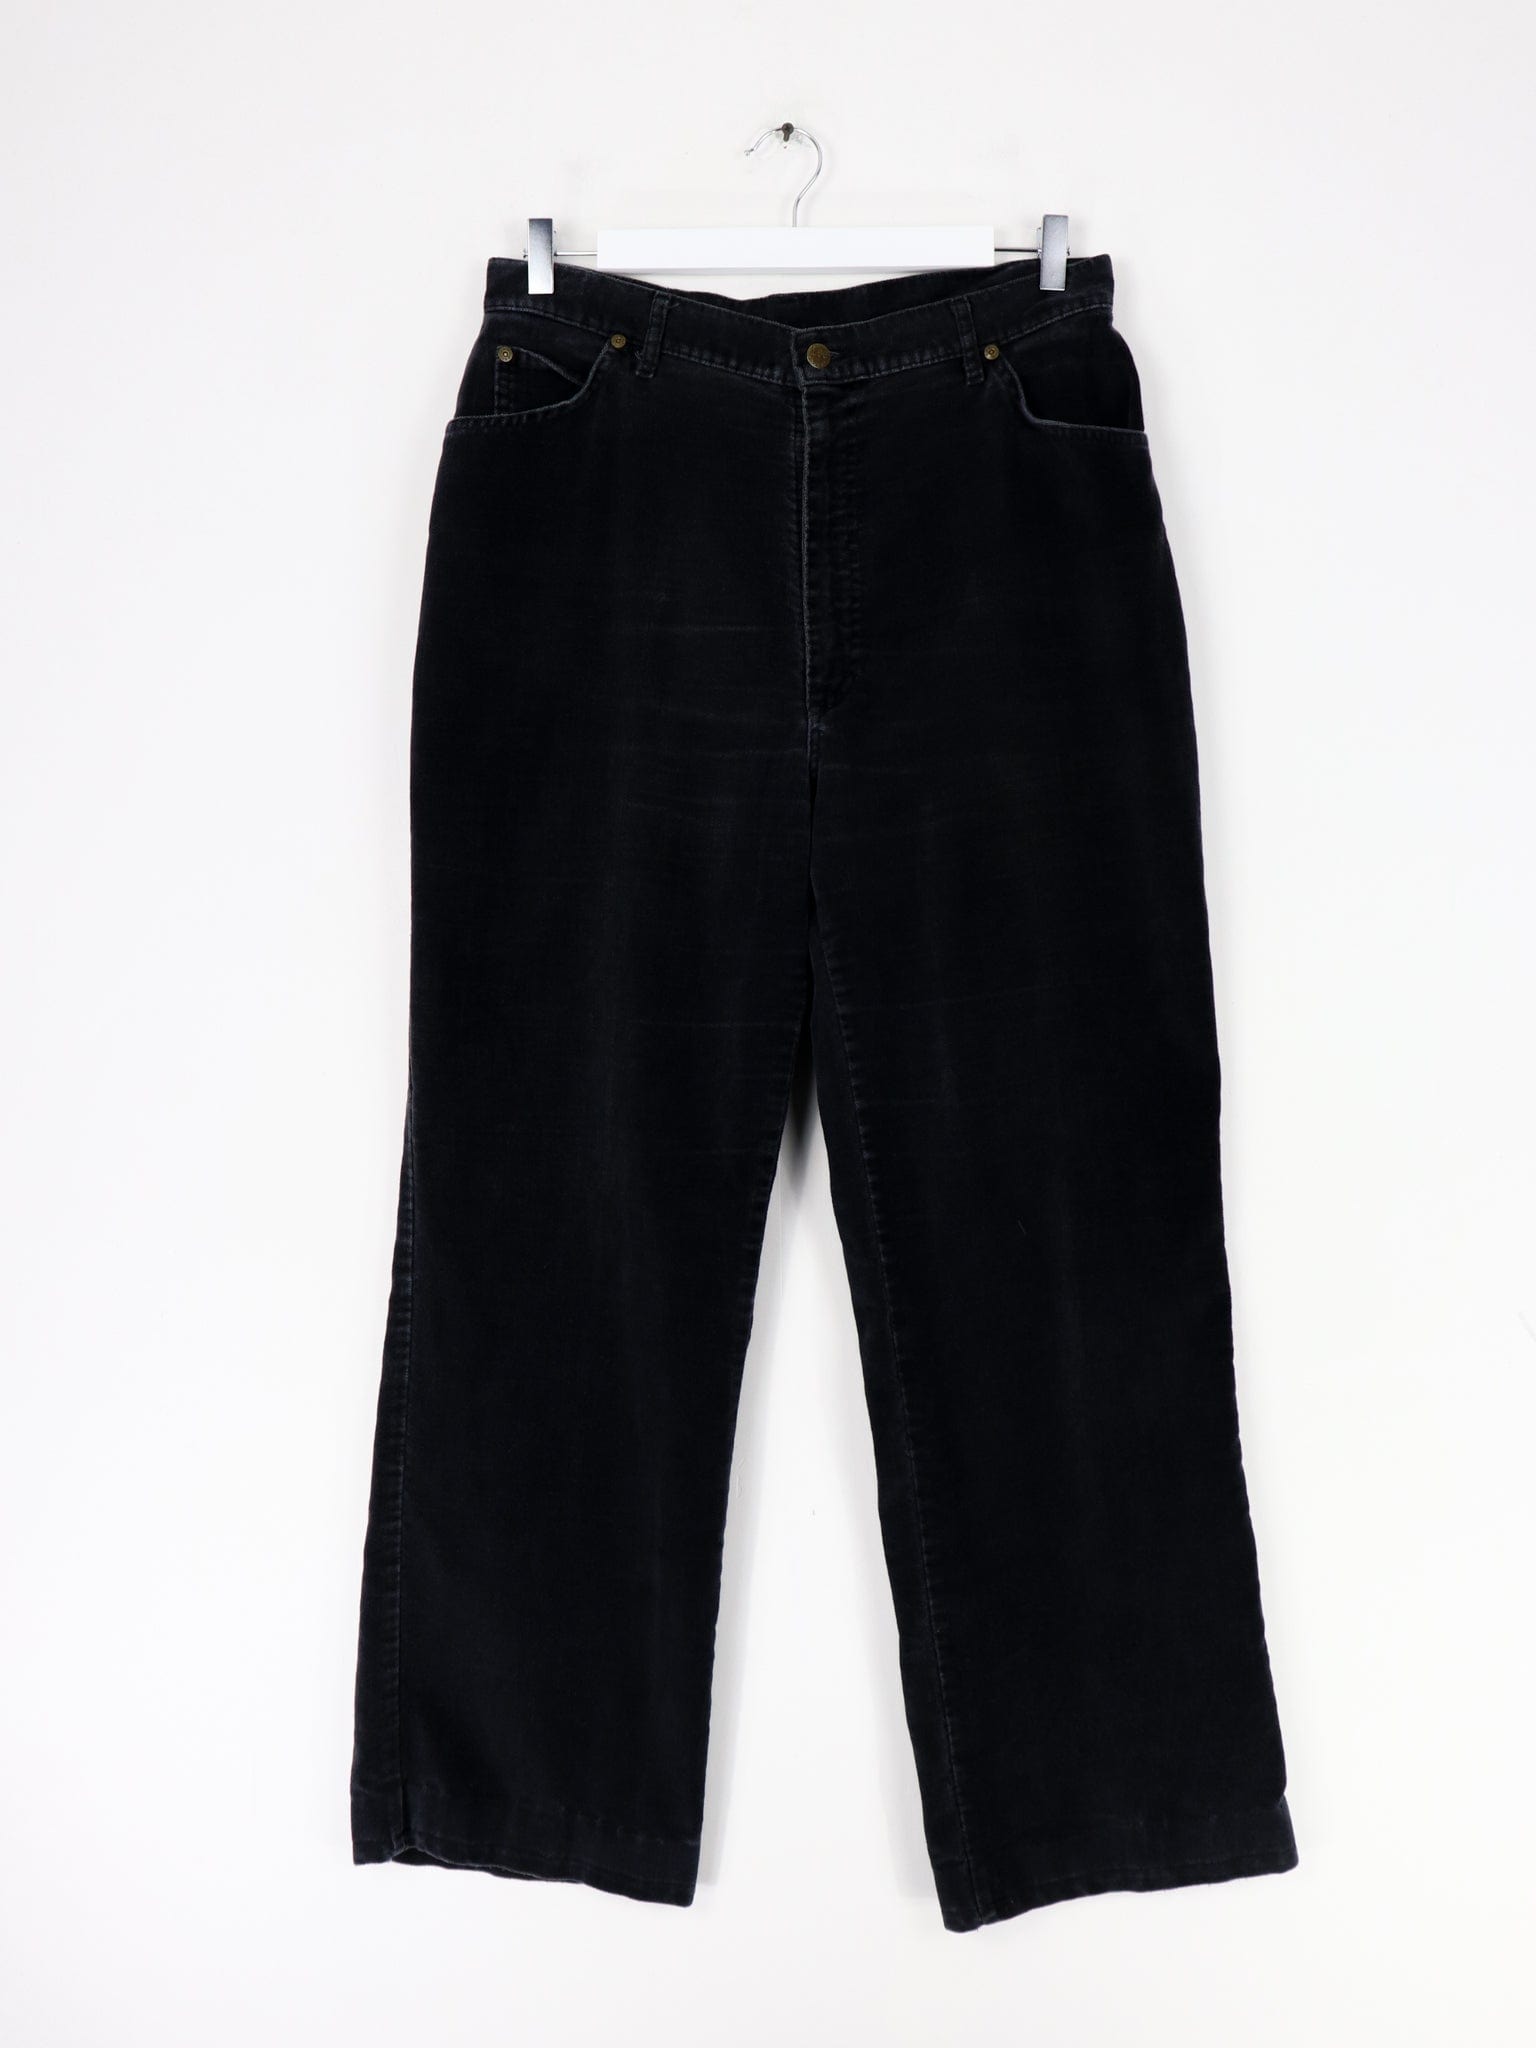 Lee Pants Vintage Lee Dress Pants Women's Size 18 (32x28)